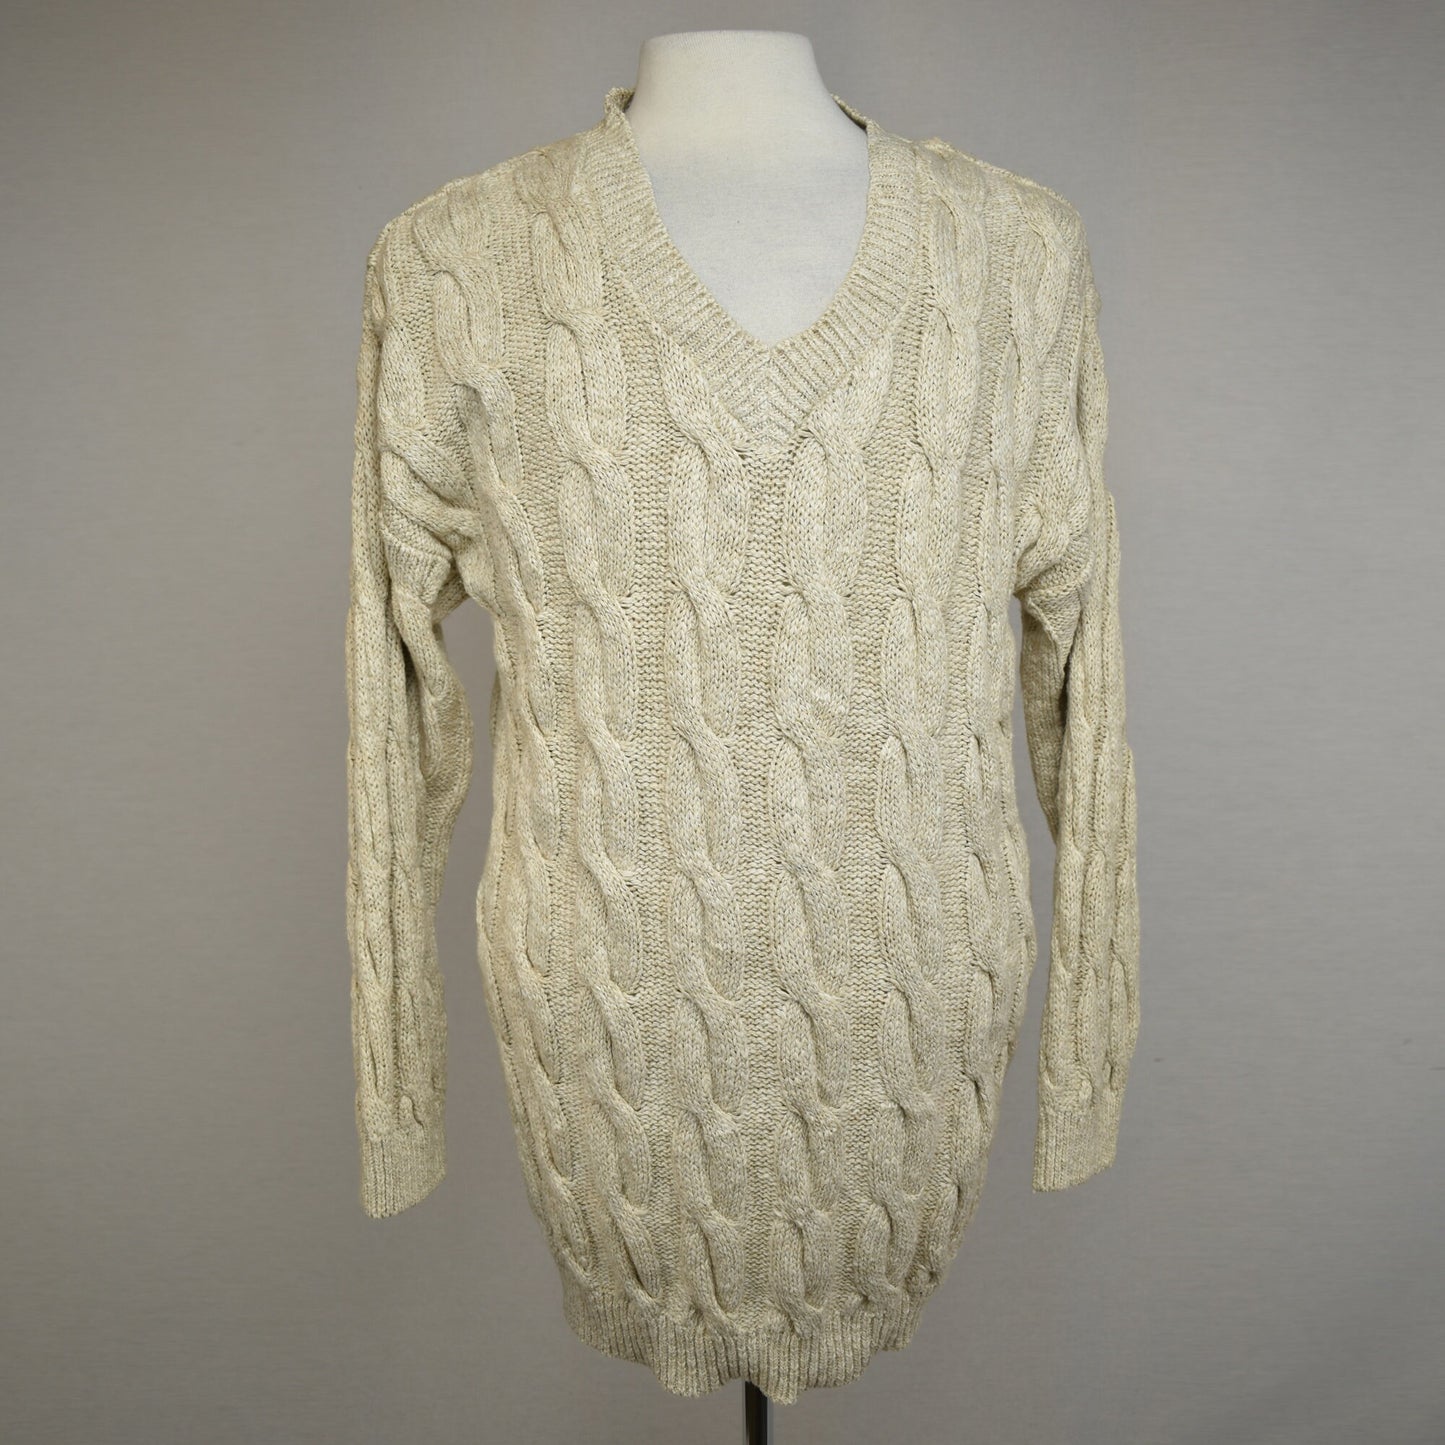 Vintage 90s Long Cable Knit Sweater - Oatmeal Melange Knit - Deep V Neck - Fisherman Aran Irish - Moda Int'l - Made in USA